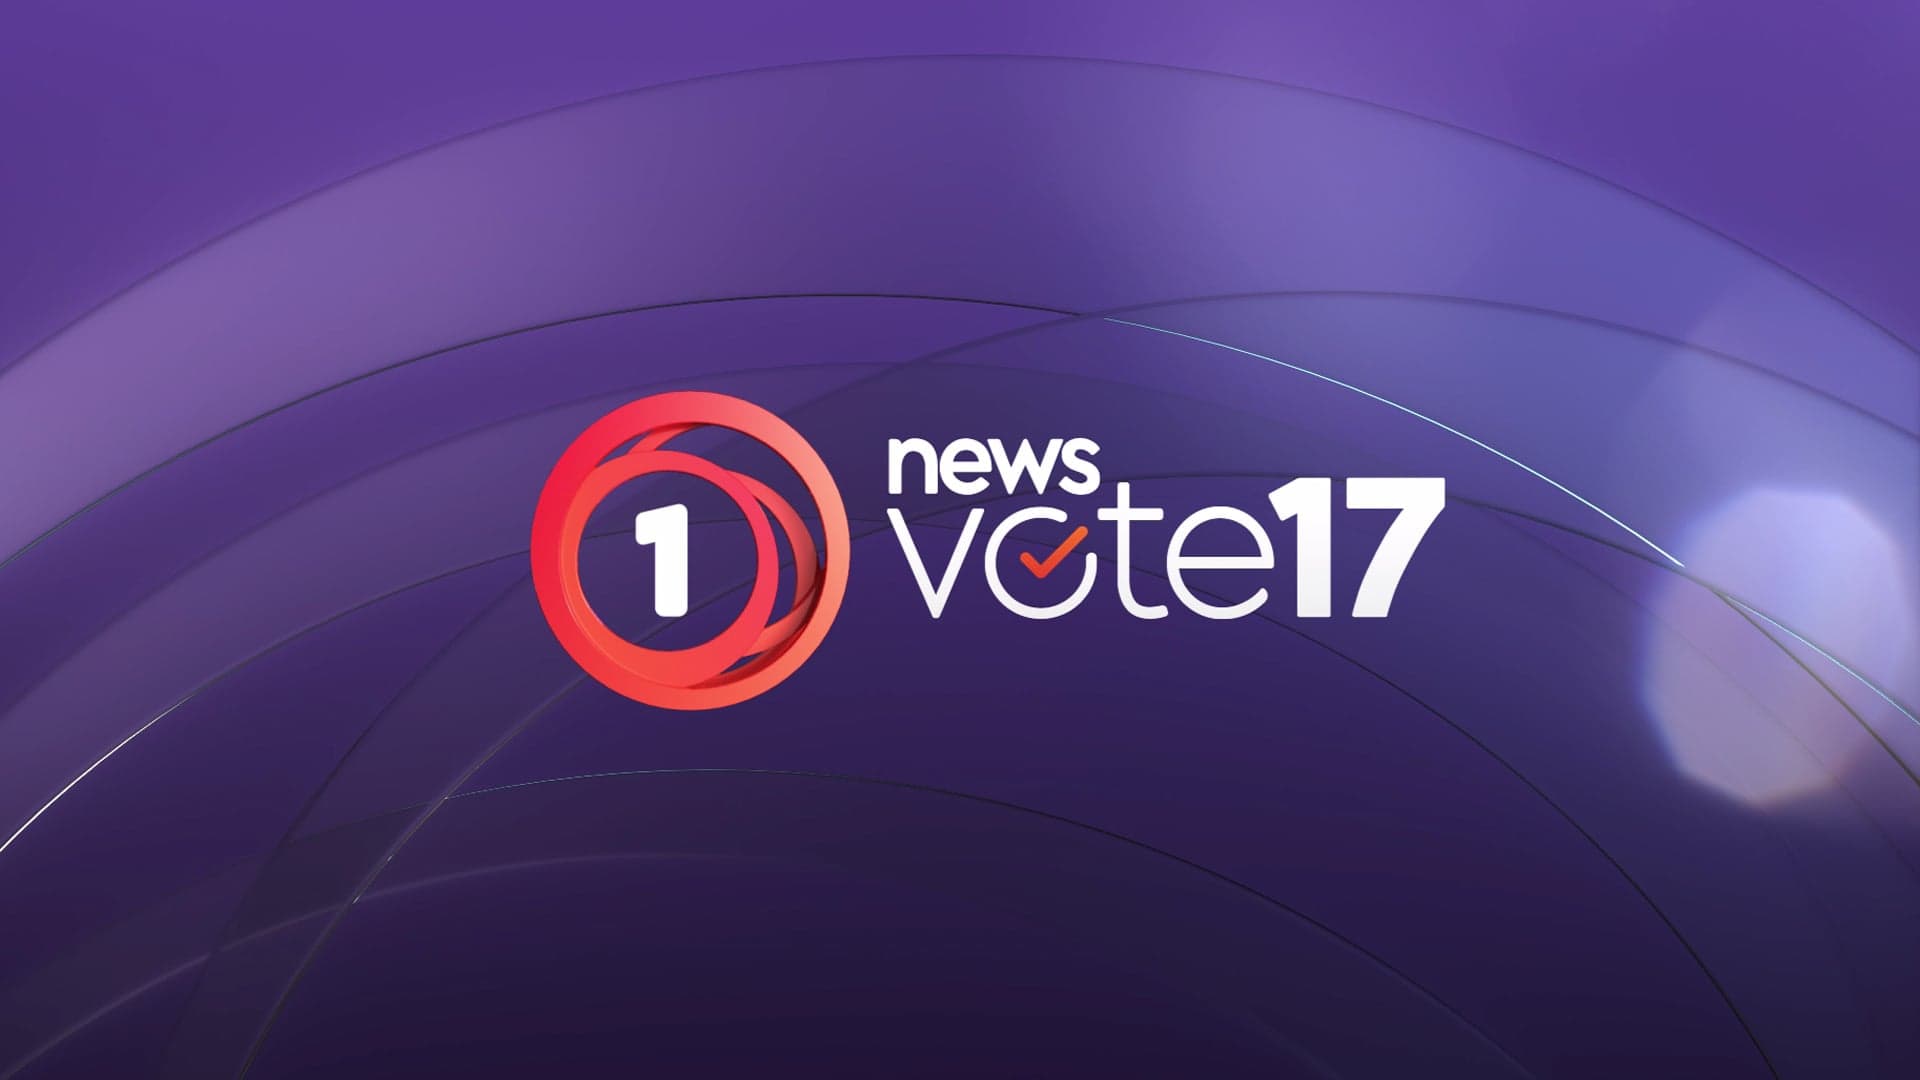 News Vote 17